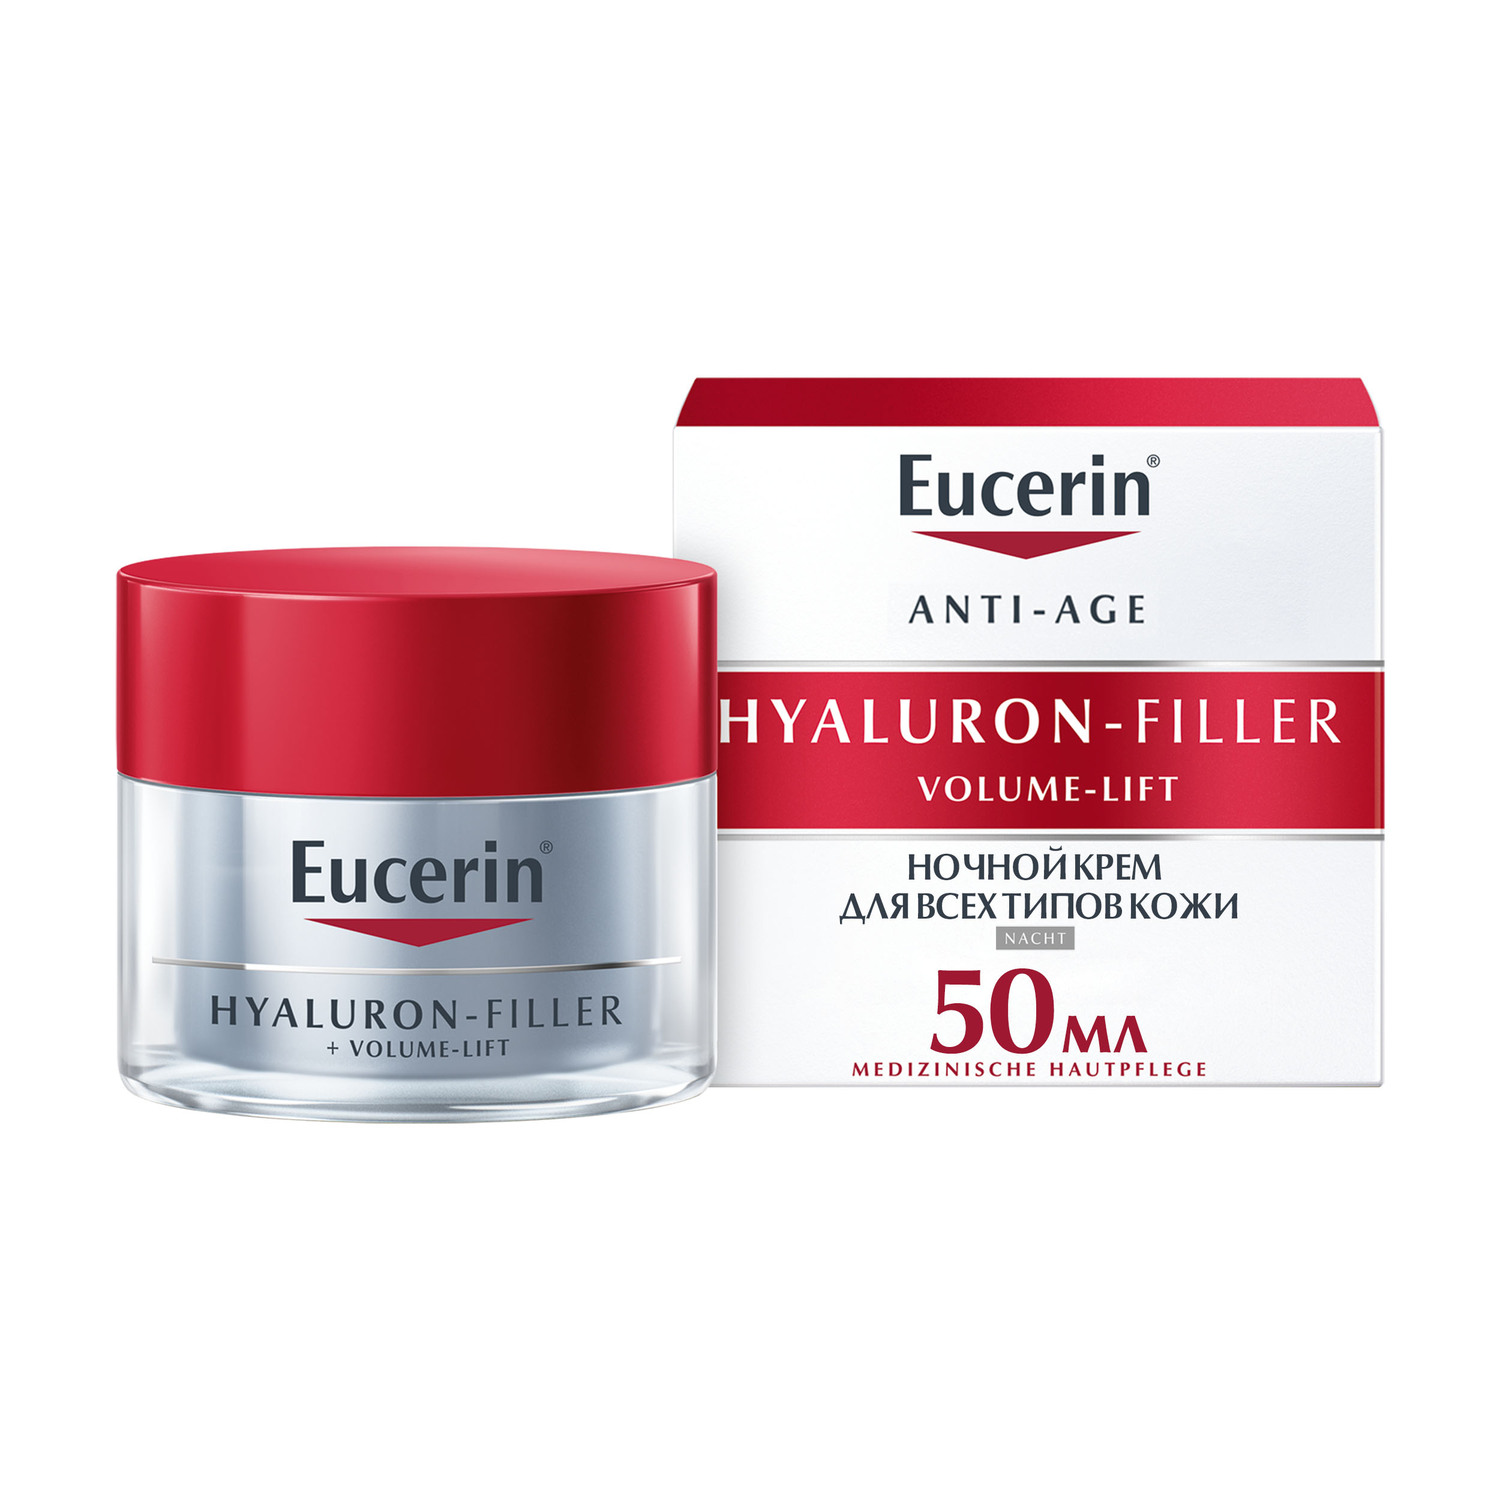 Eucerin Крем для ночного ухода за кожей, 50 мл (Eucerin, Hyaluron-Filler + Volume-Lift) eucerin hyaluron filler volume lift эуцерин крем для ночного ухода за кожей 50 мл